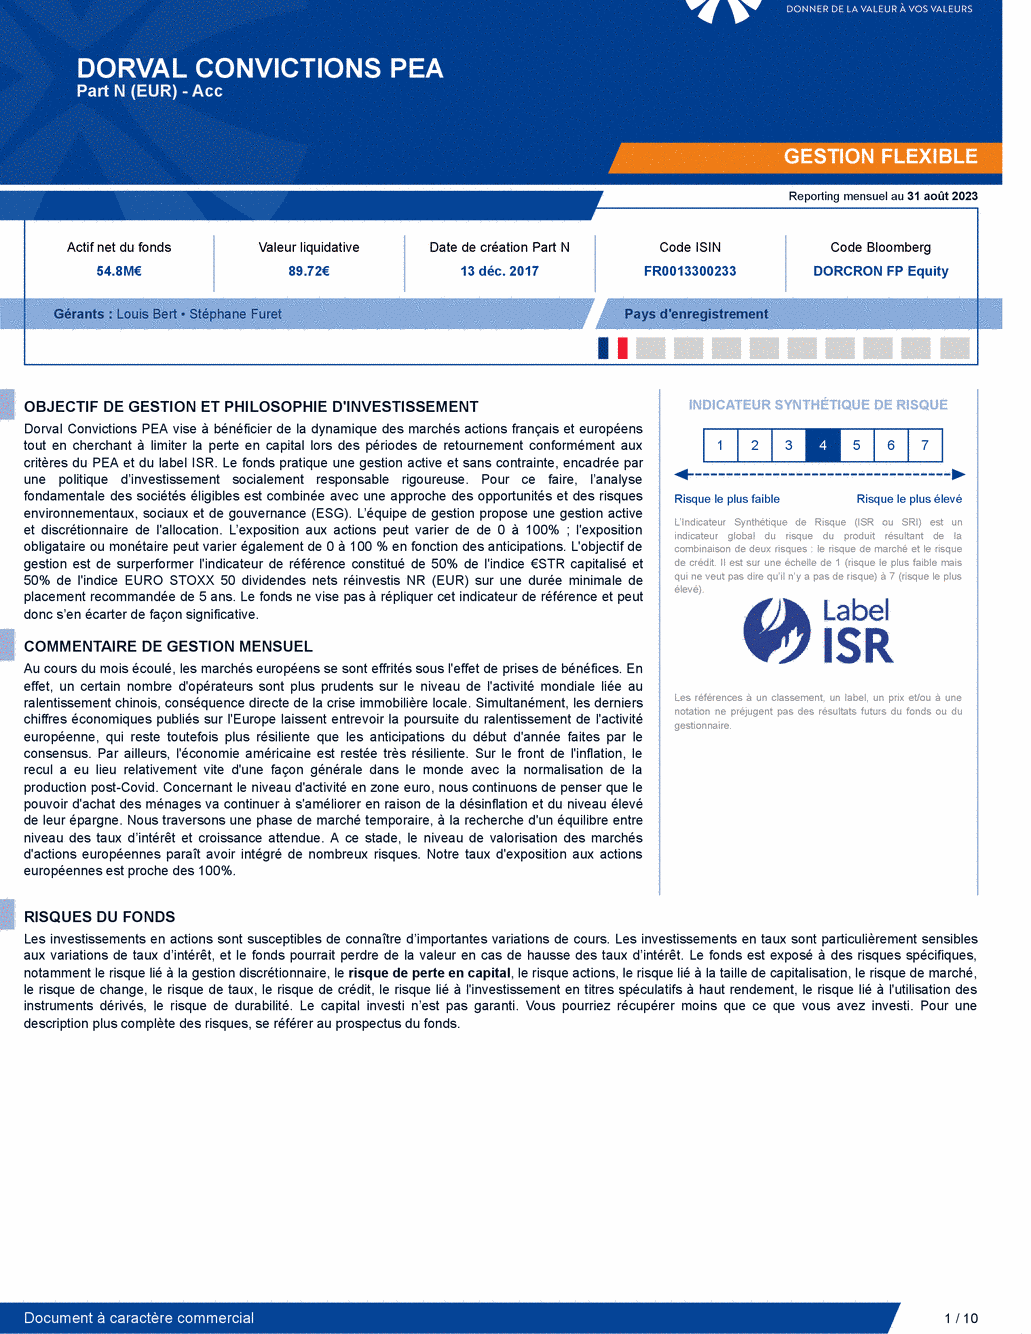 Reporting DORVAL CONVICTIONS PEA Part N - 31/08/2023 - Français